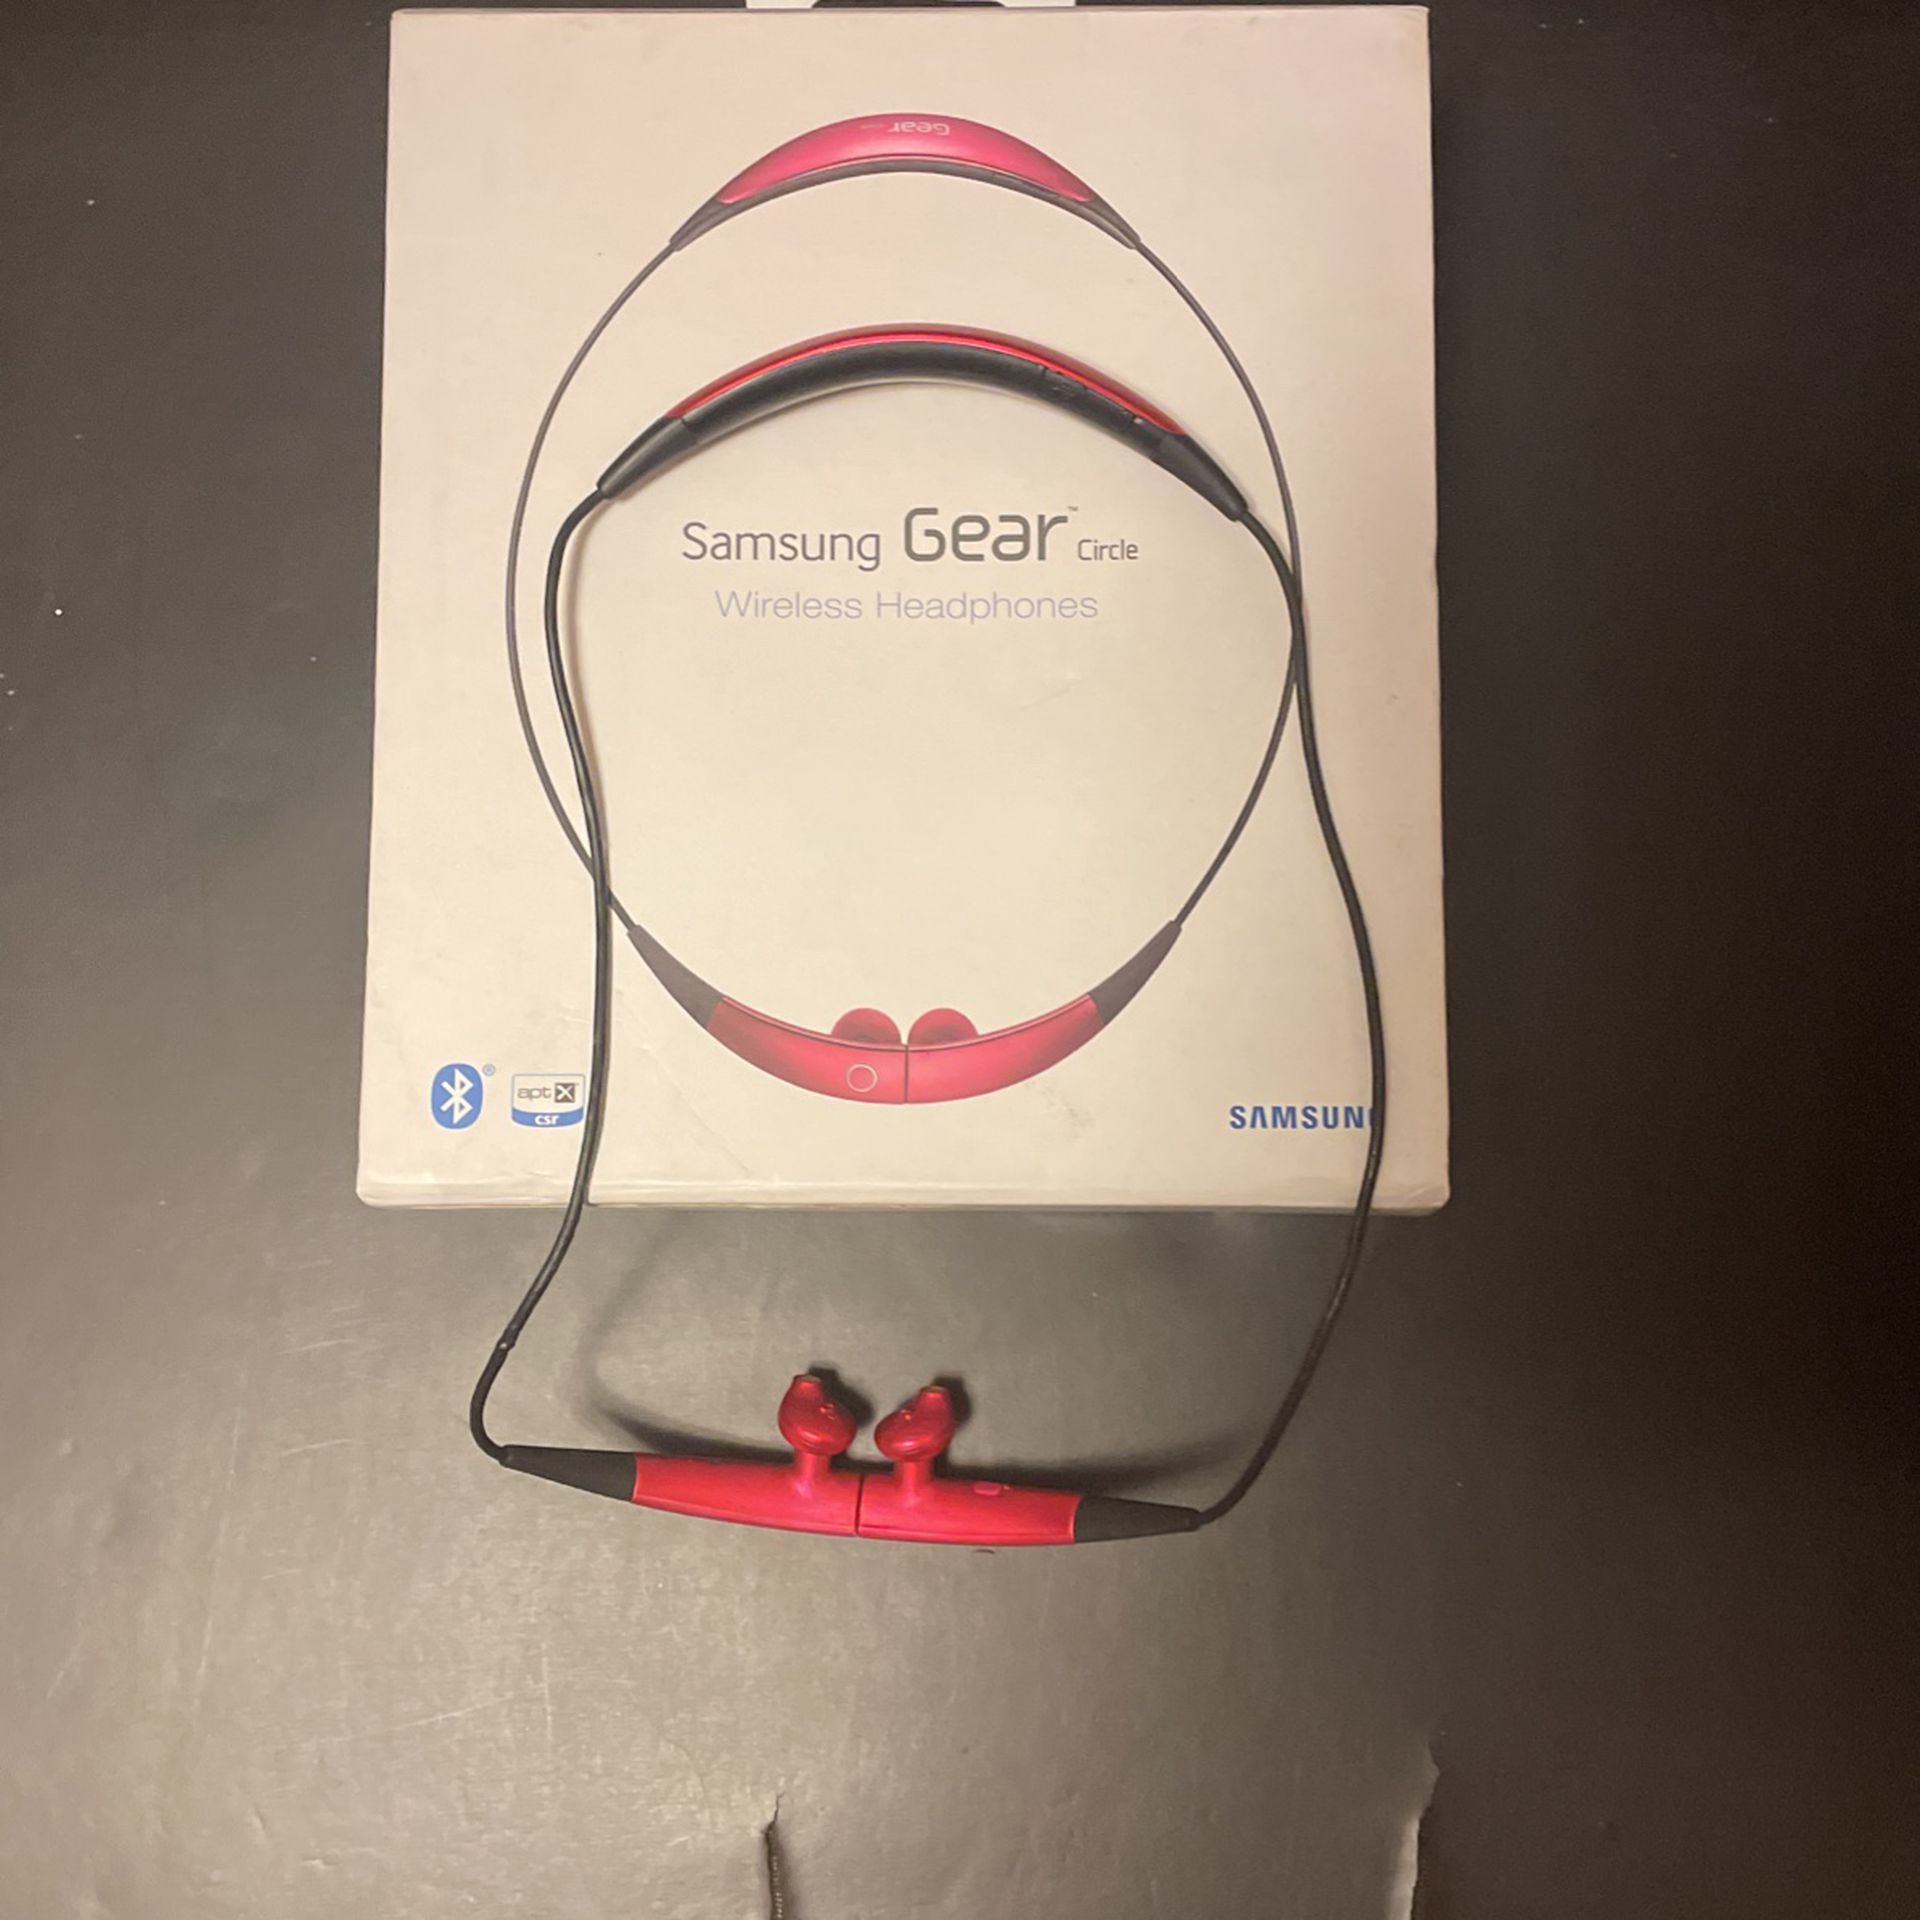 Samsung gear circle wireless headphones